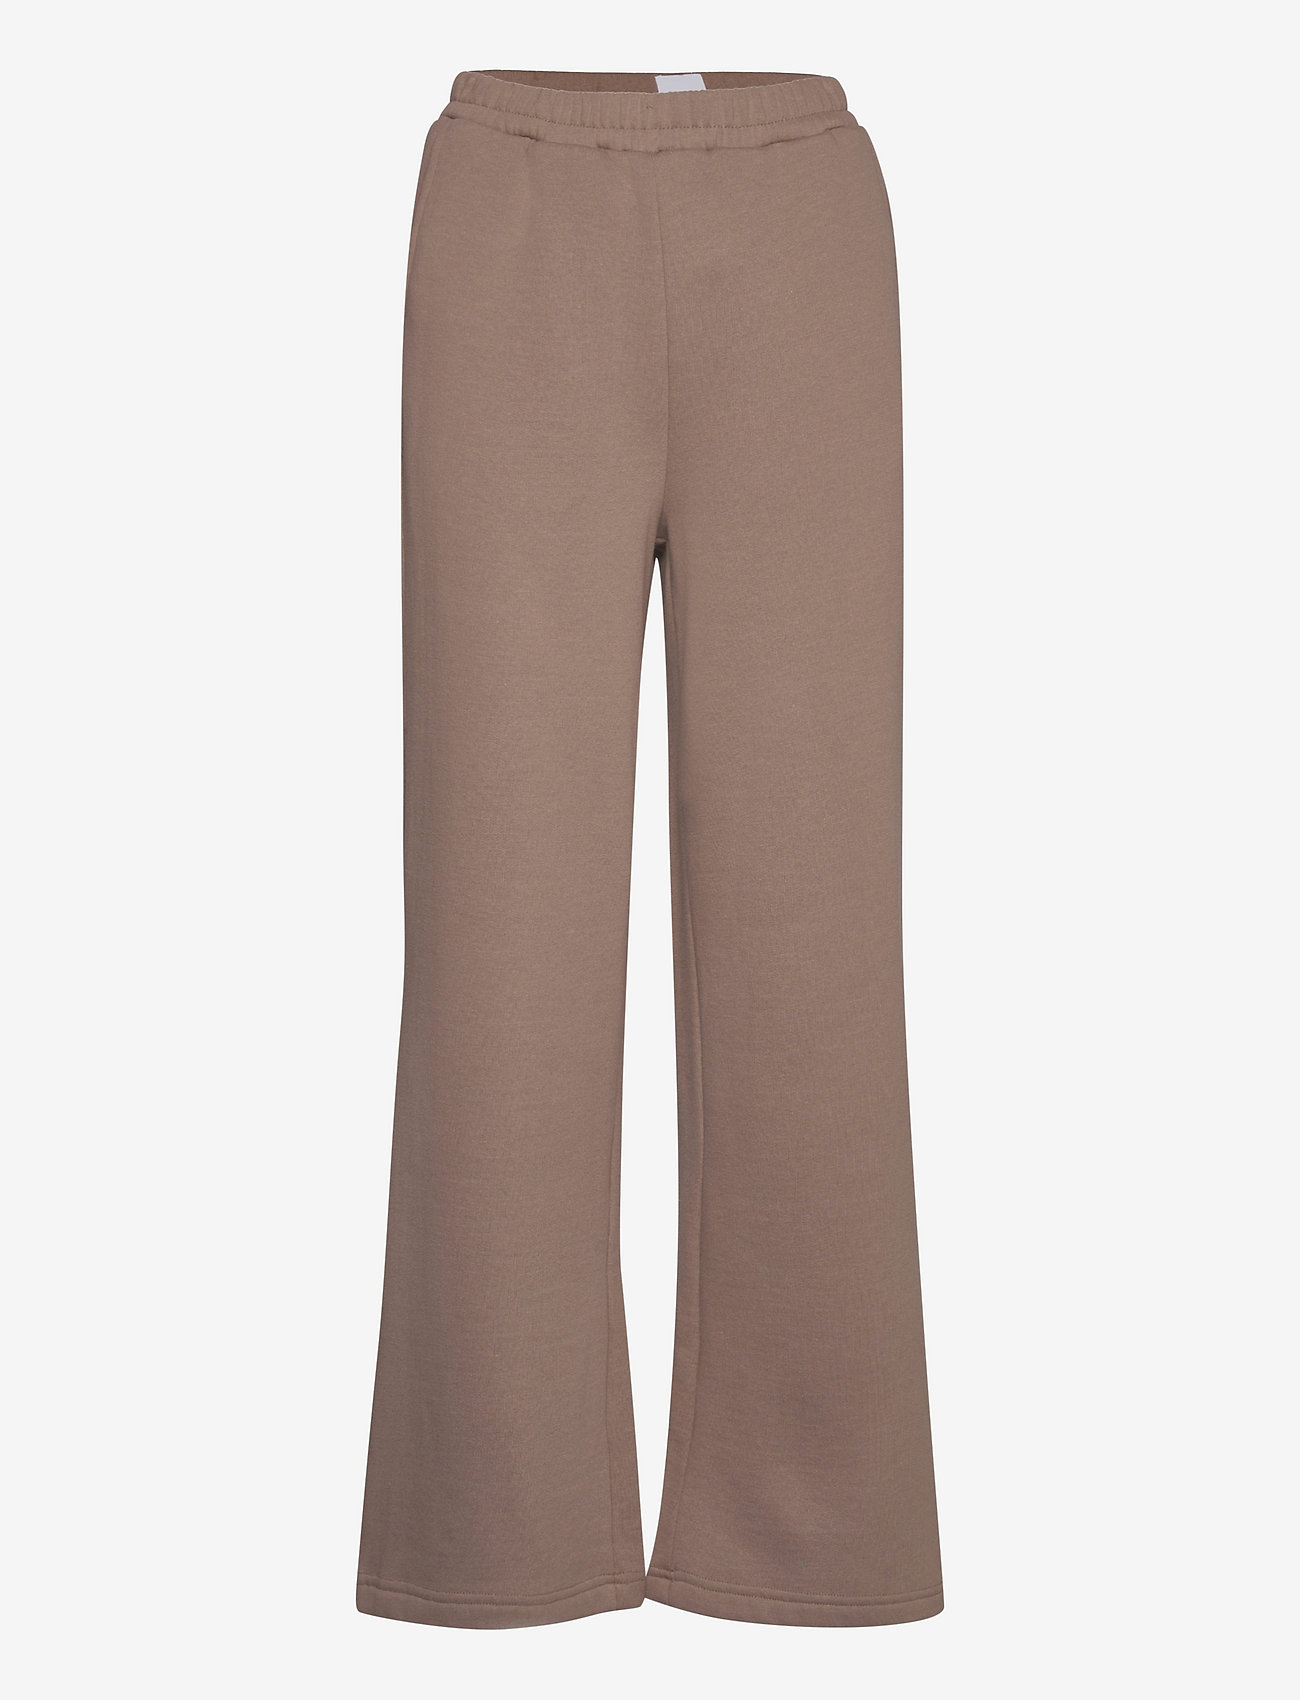 hálo - TUNDRA woolen wide college pants - jogas bikses - sand - 0